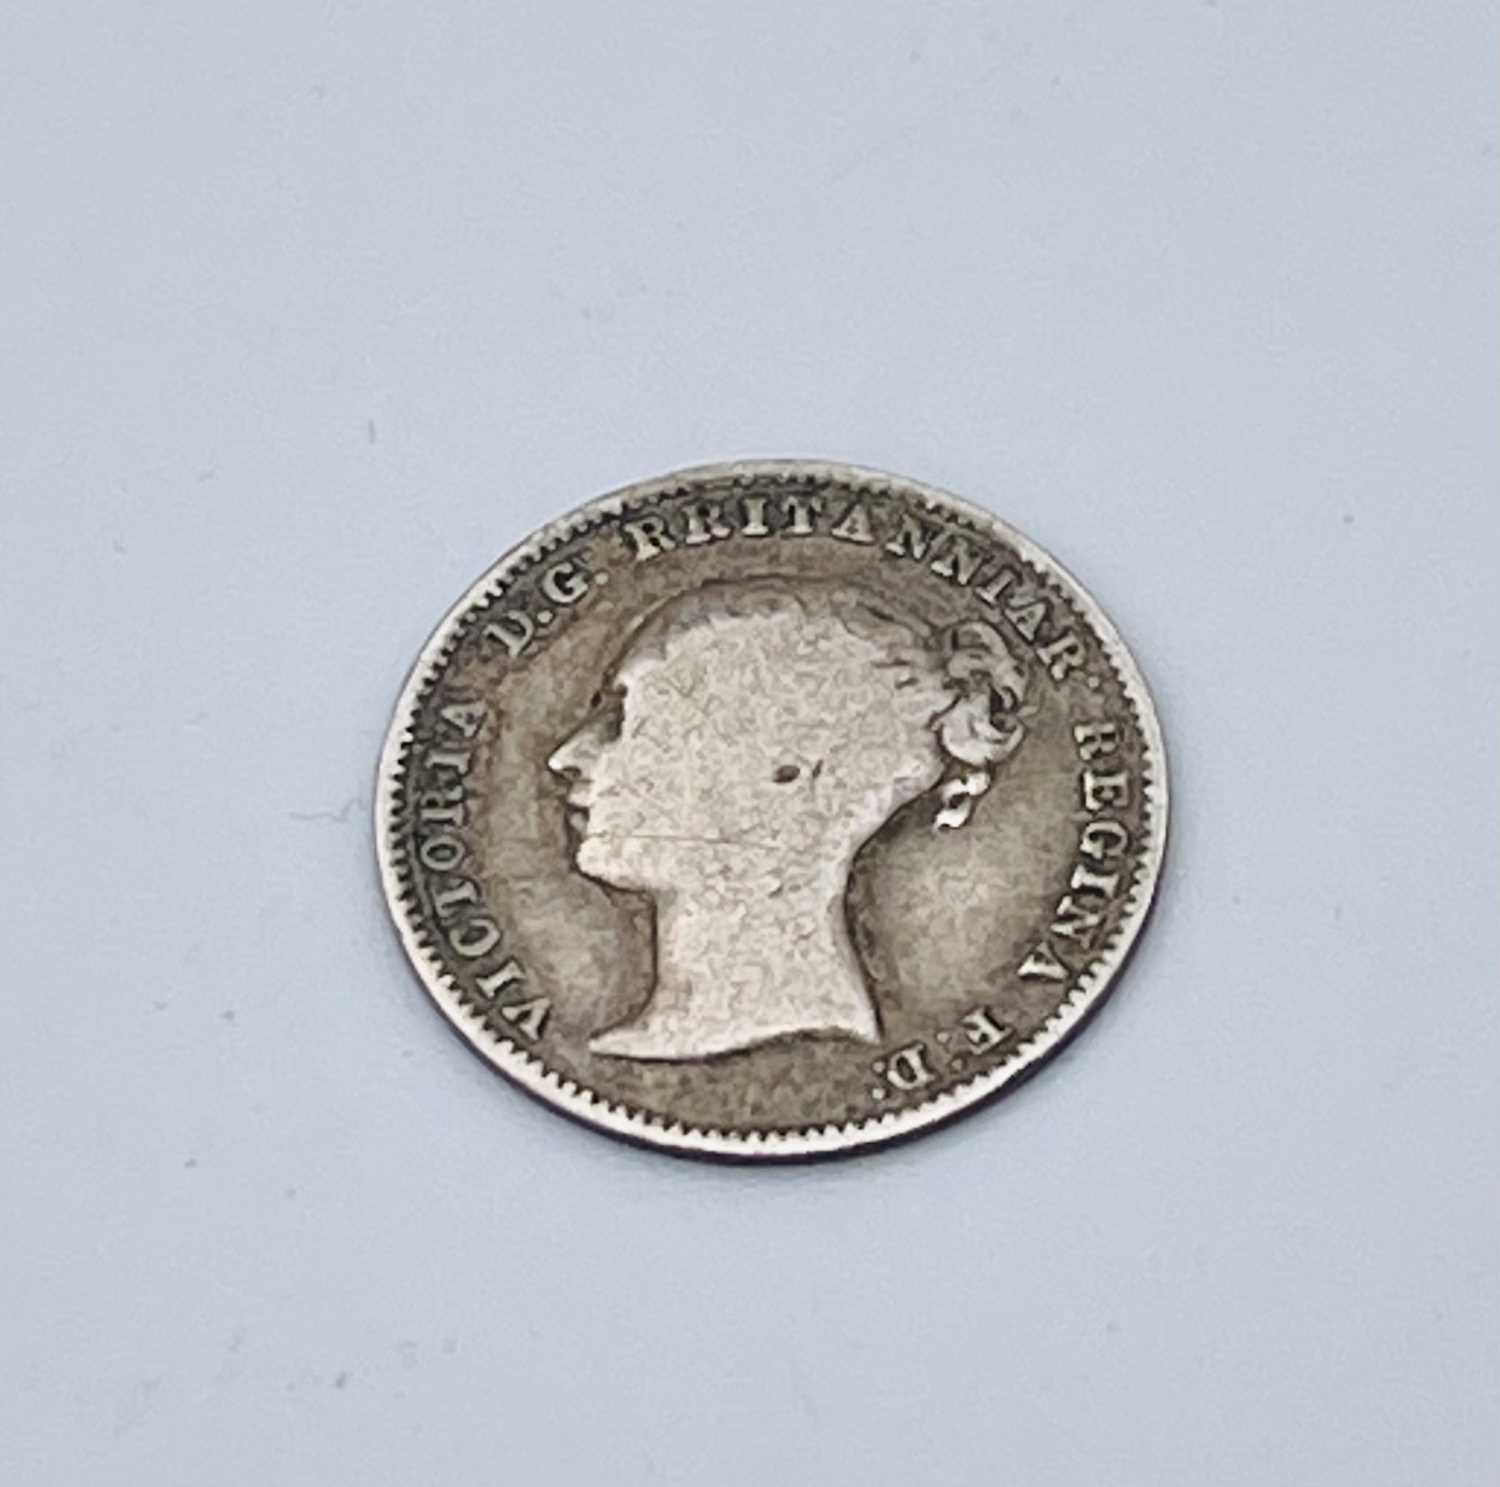 Silver Threepence 1868 Error Coin. The 1868 "RRITANNIAR" error coin - catalogued in current coin